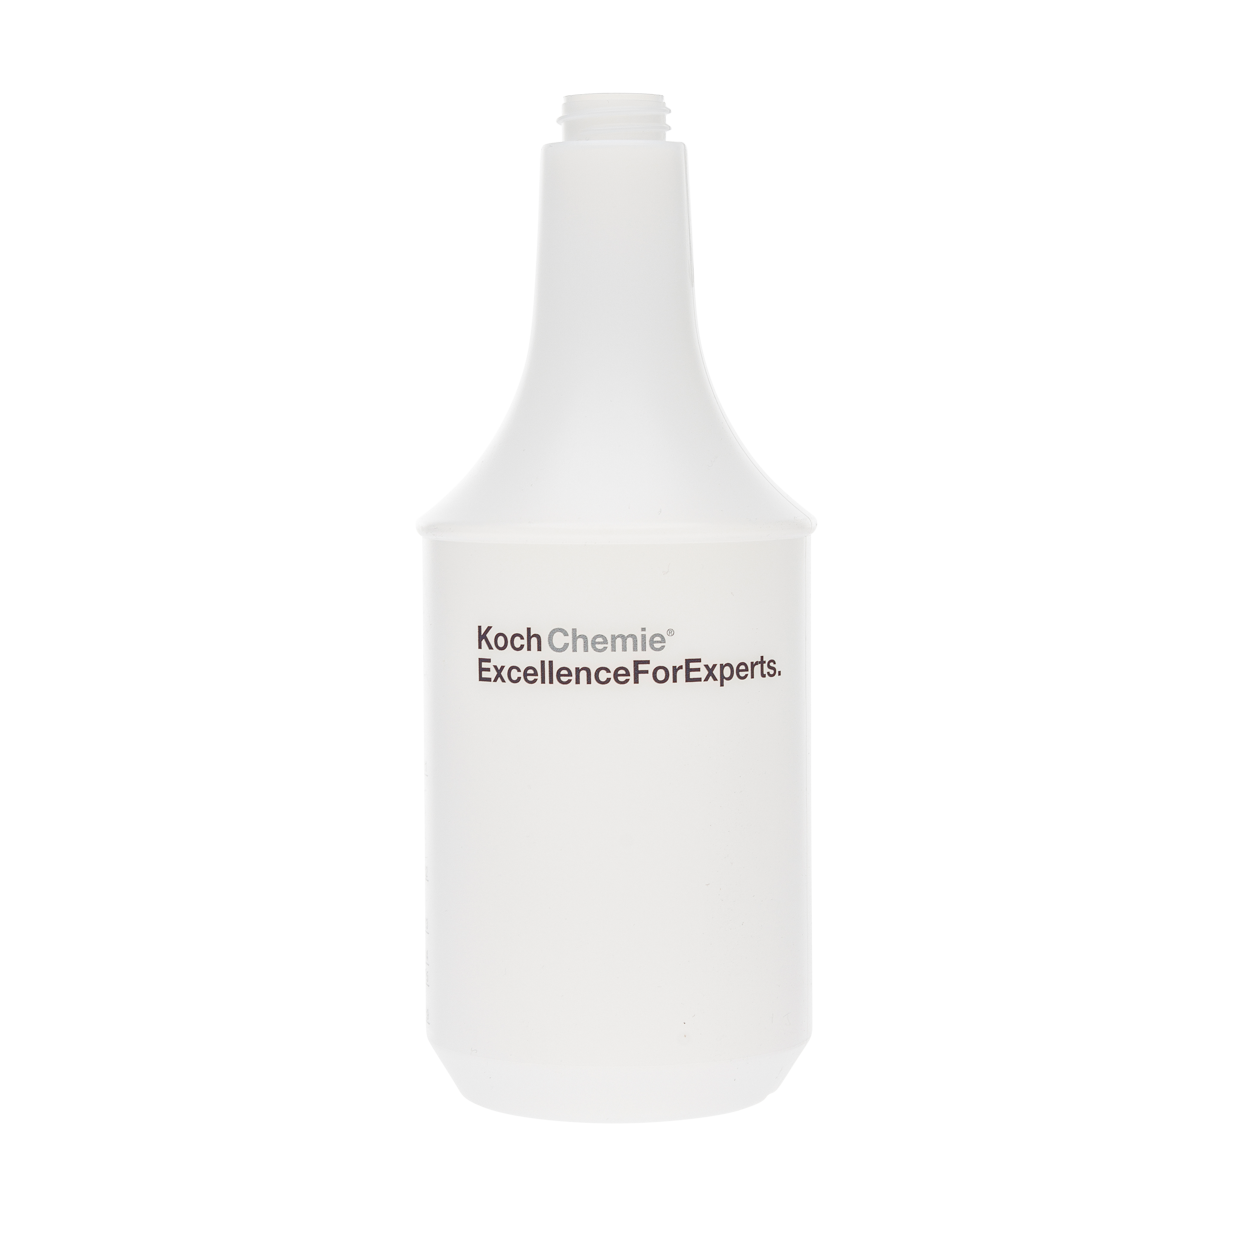 KochChemie Cylindrical Bottle (32oz)